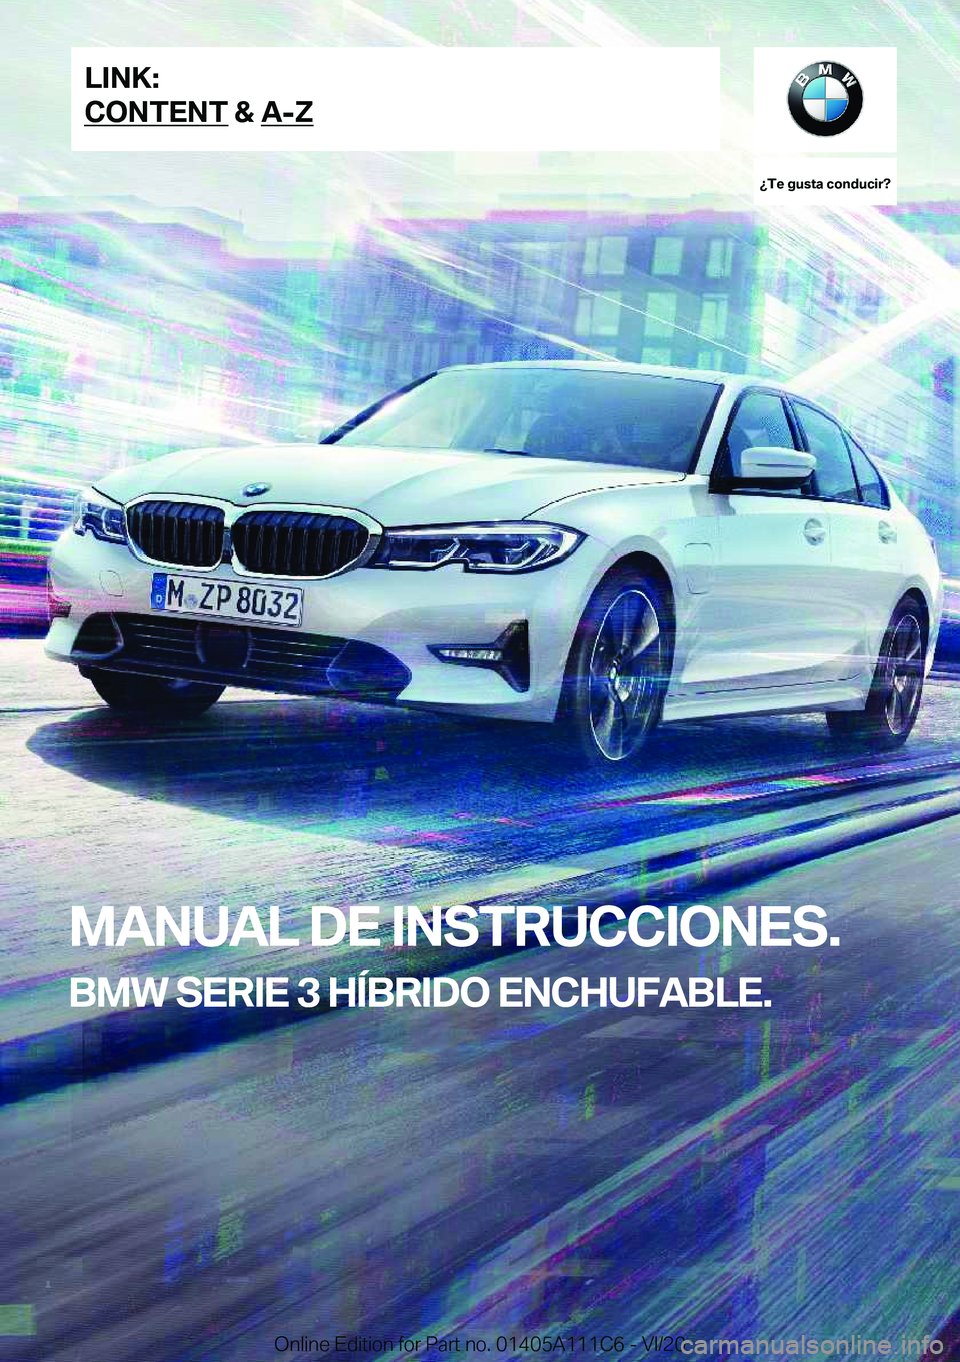 BMW 3 SERIES SEDAN PLUG-IN HYBRID 2021  Manuales de Empleo (in Spanish) ��T�e��g�u�s�t�a��c�o�n�d�u�c�i�r� 
�M�A�N�U�A�L��D�E��I�N�S�T�R�U�C�C�I�O�N�E�S�.
�B�M�W��S�E�R�I�E��3��H�